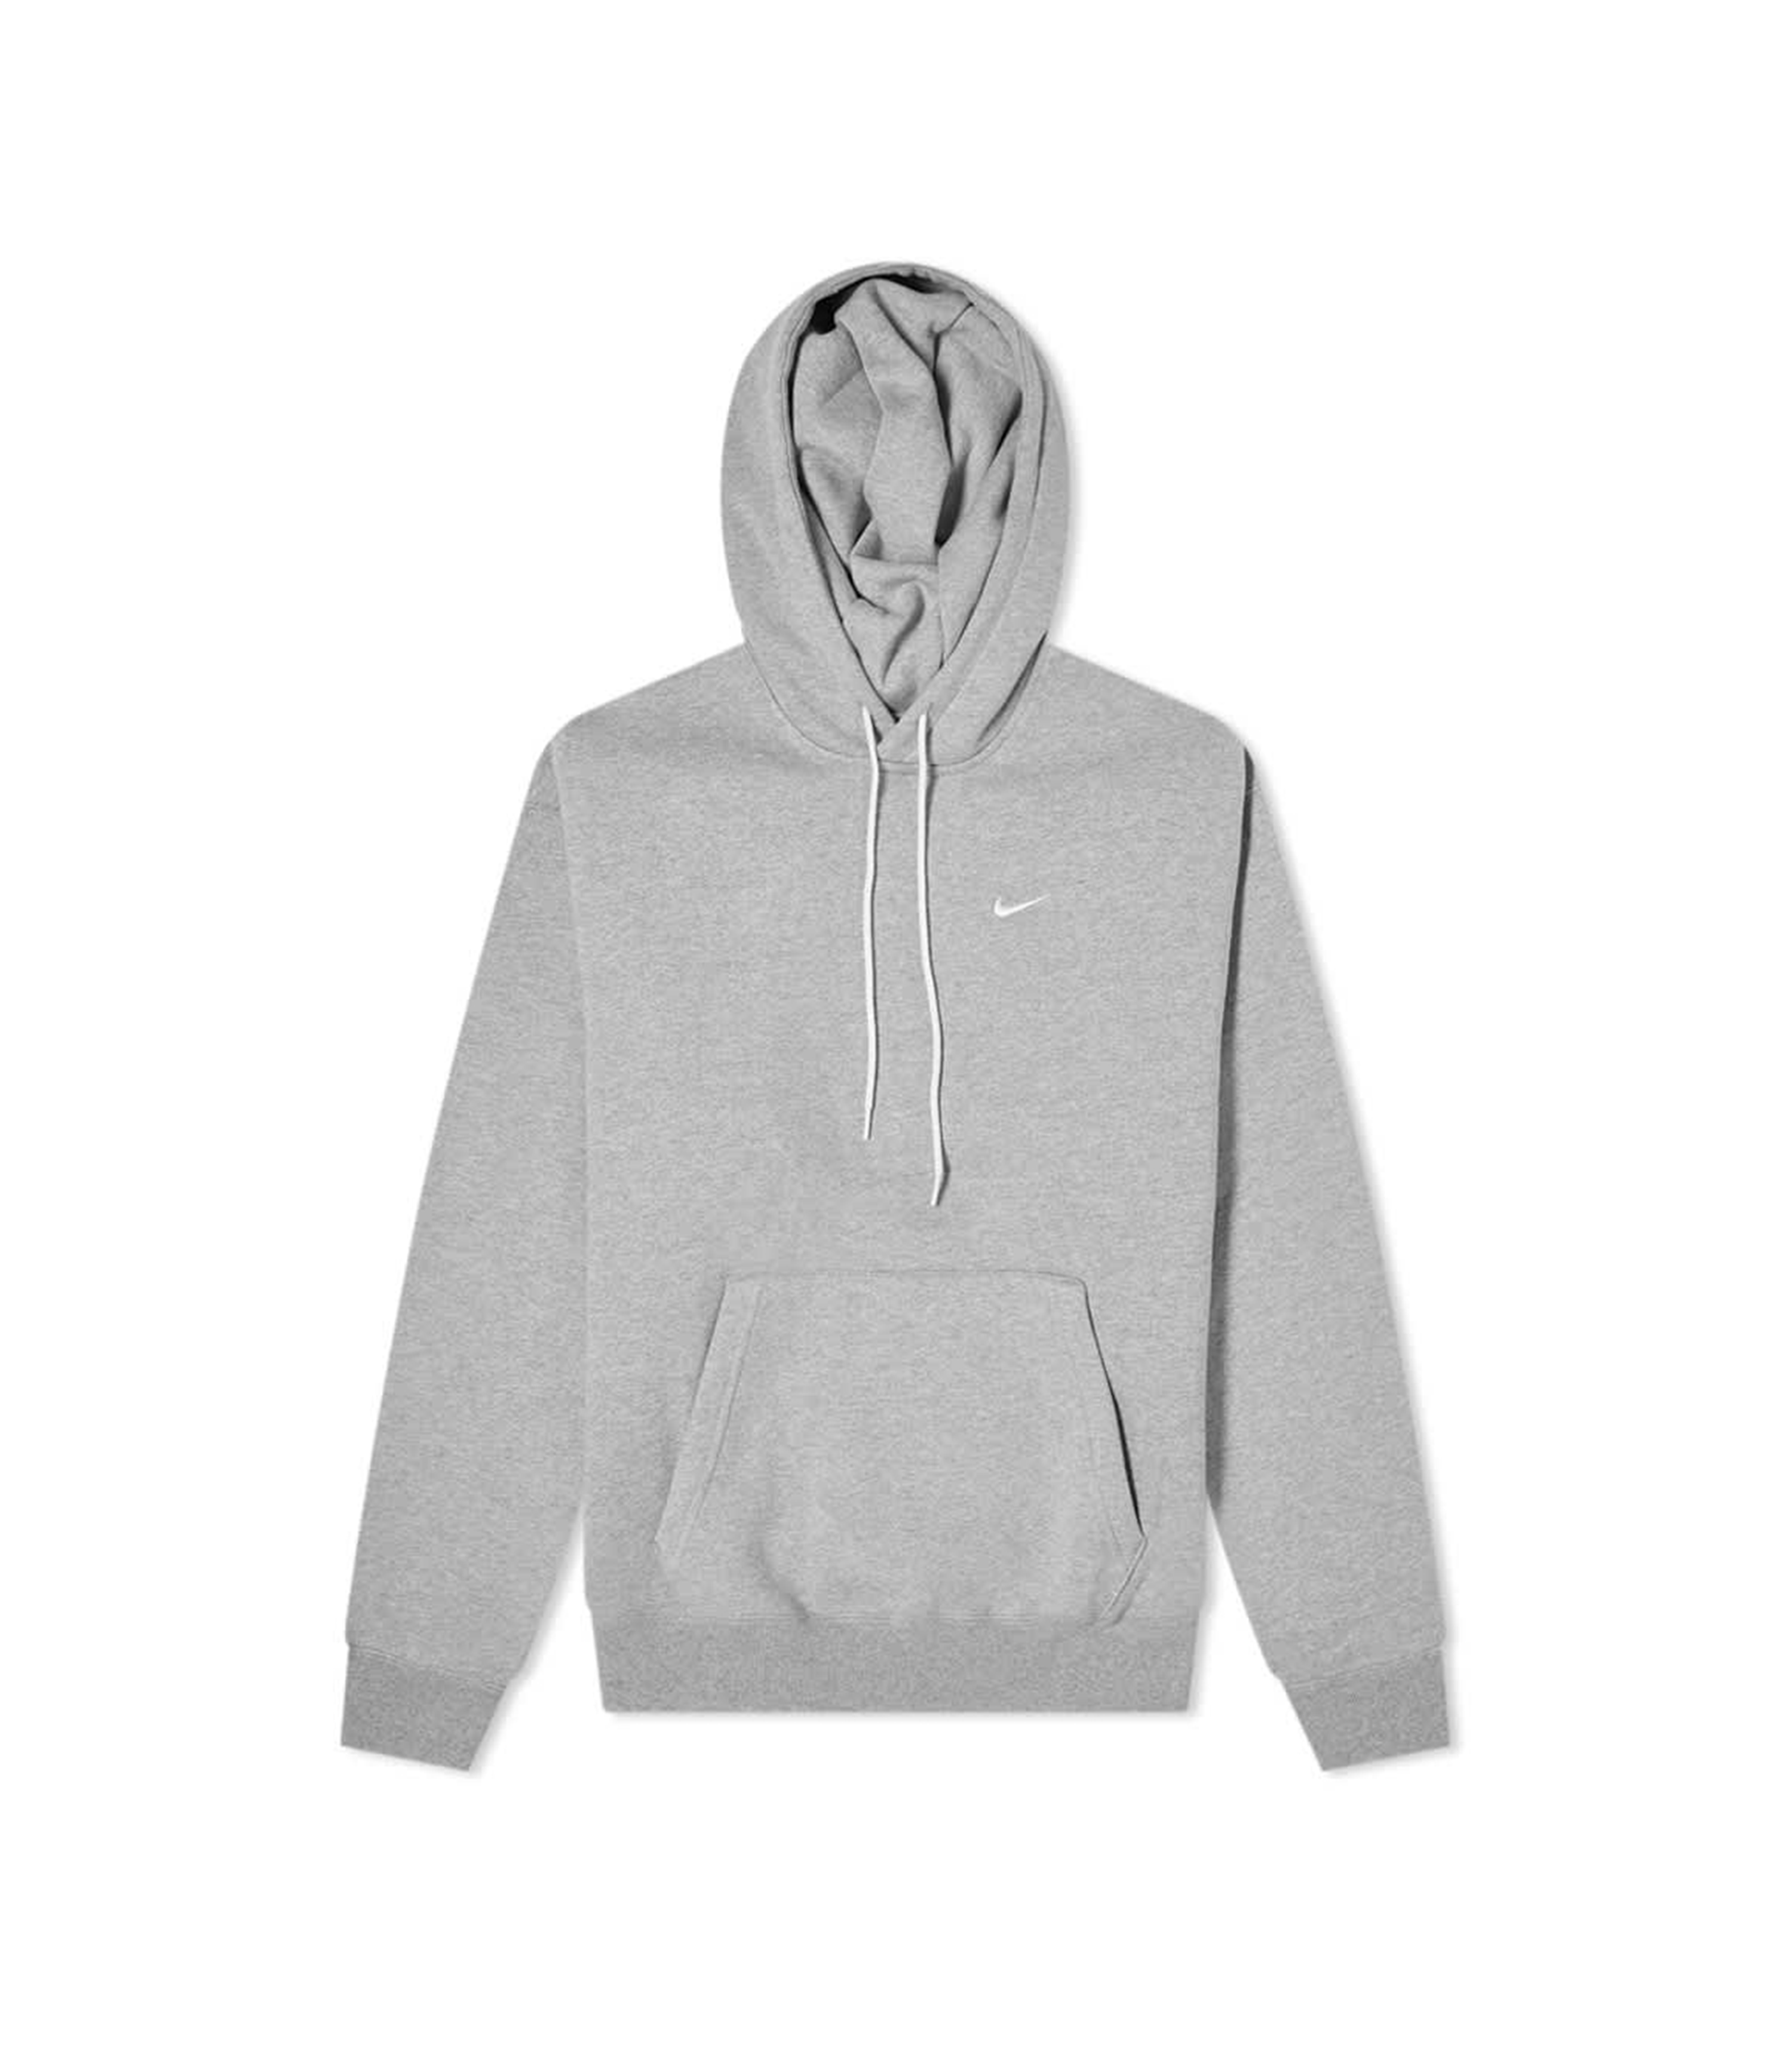 NRG Hooded Sweatshirt - Dark Grey / Heather White